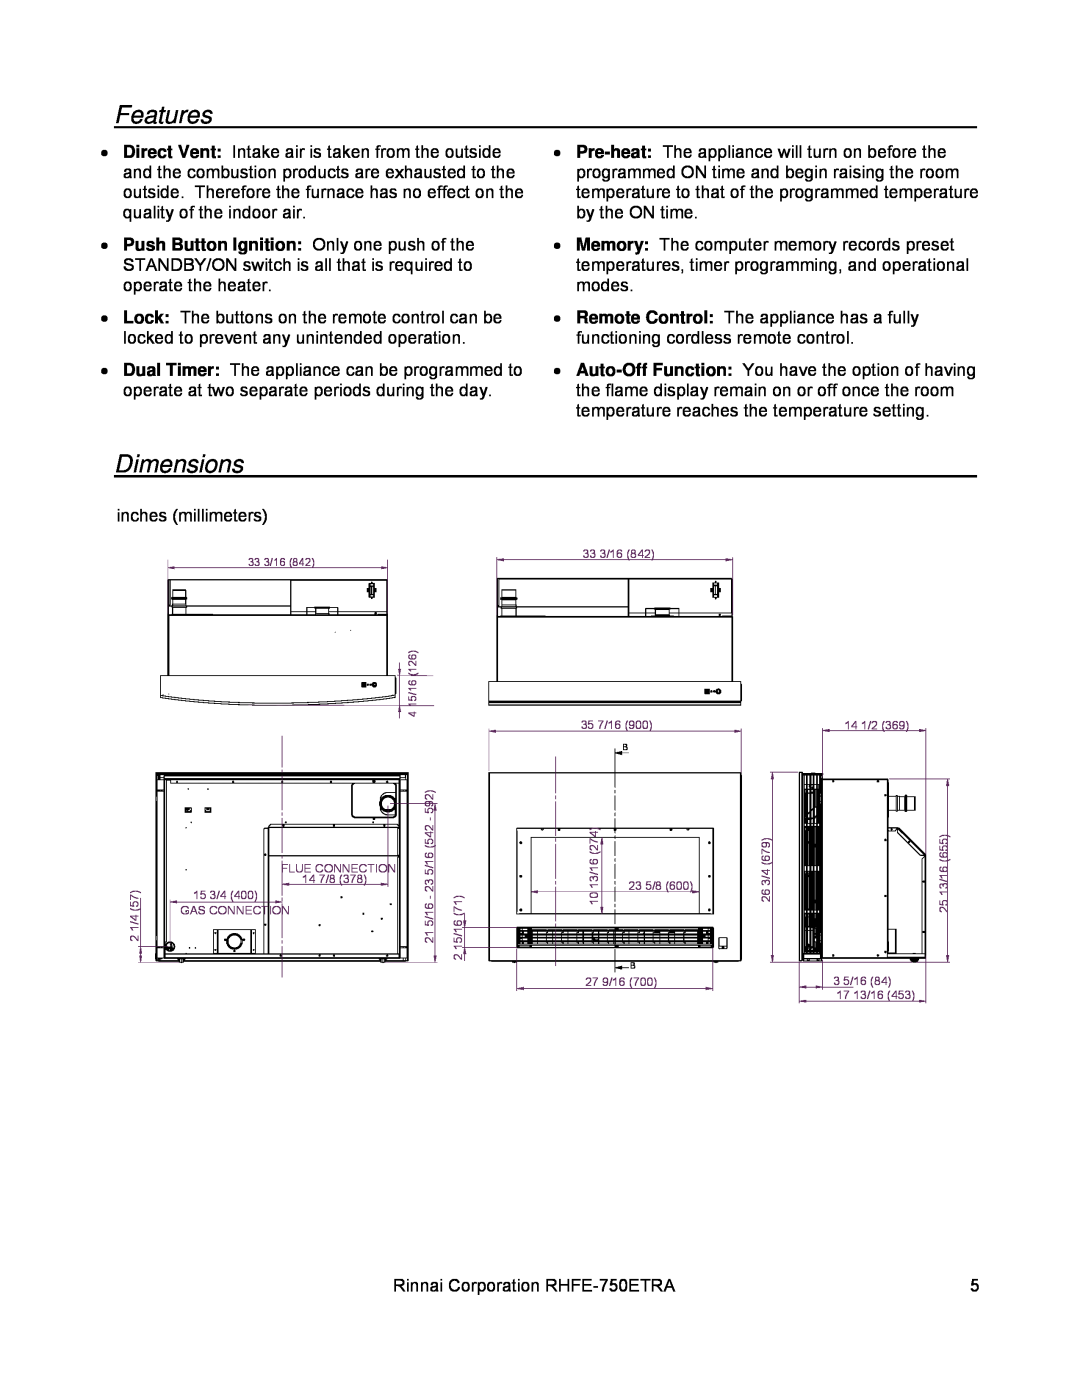 Rinnai RHFE-750ETRA installation manual Features, Dimensions 